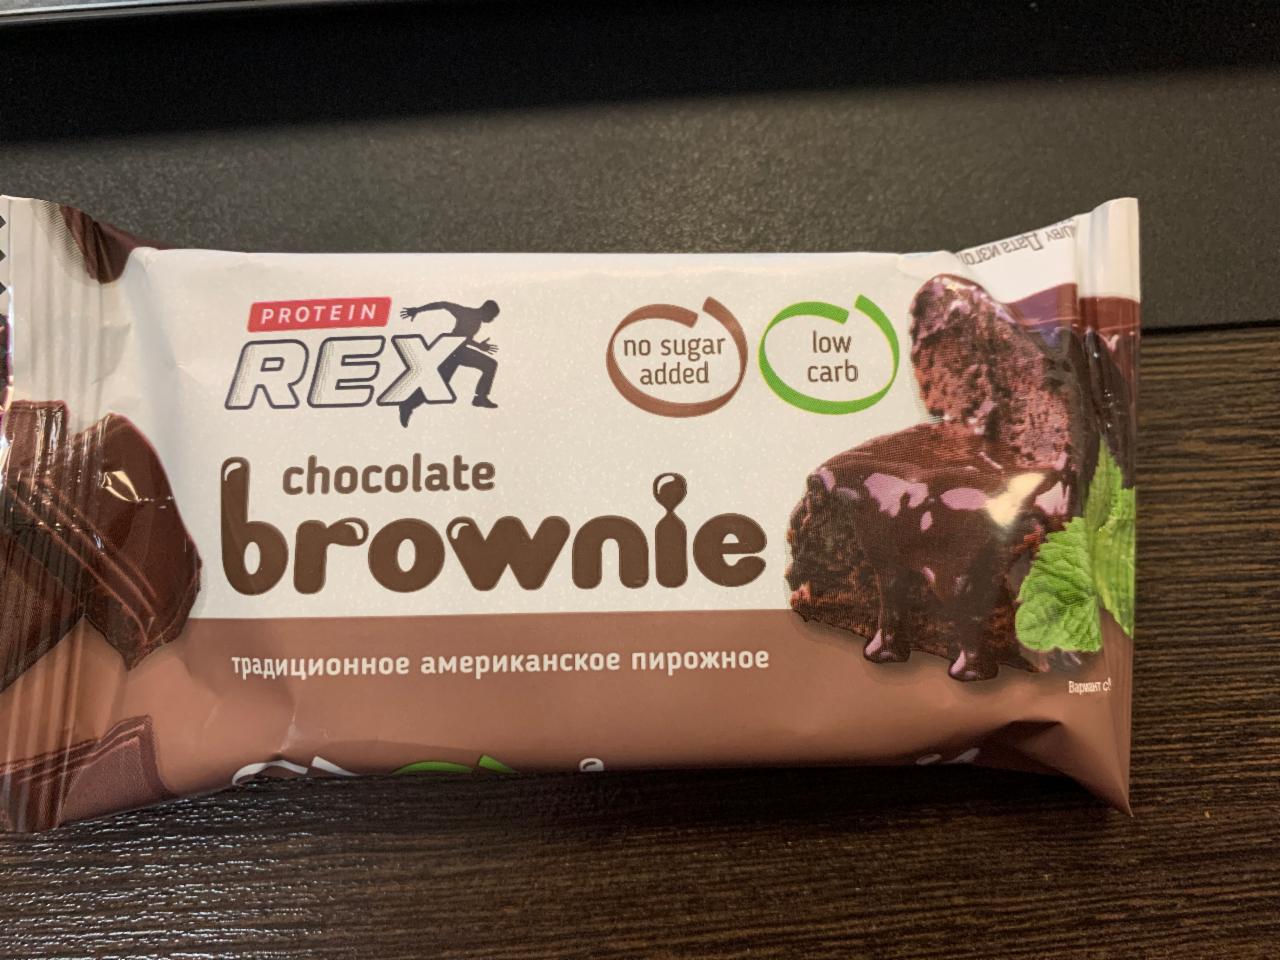 Пирожное Protein Rex Brownie. Protein Rex Tiramisu пирожное. Protein Rex Chocolate Brownie пирожное с вишней 50 гр.. Протеиновое пирожное брауни